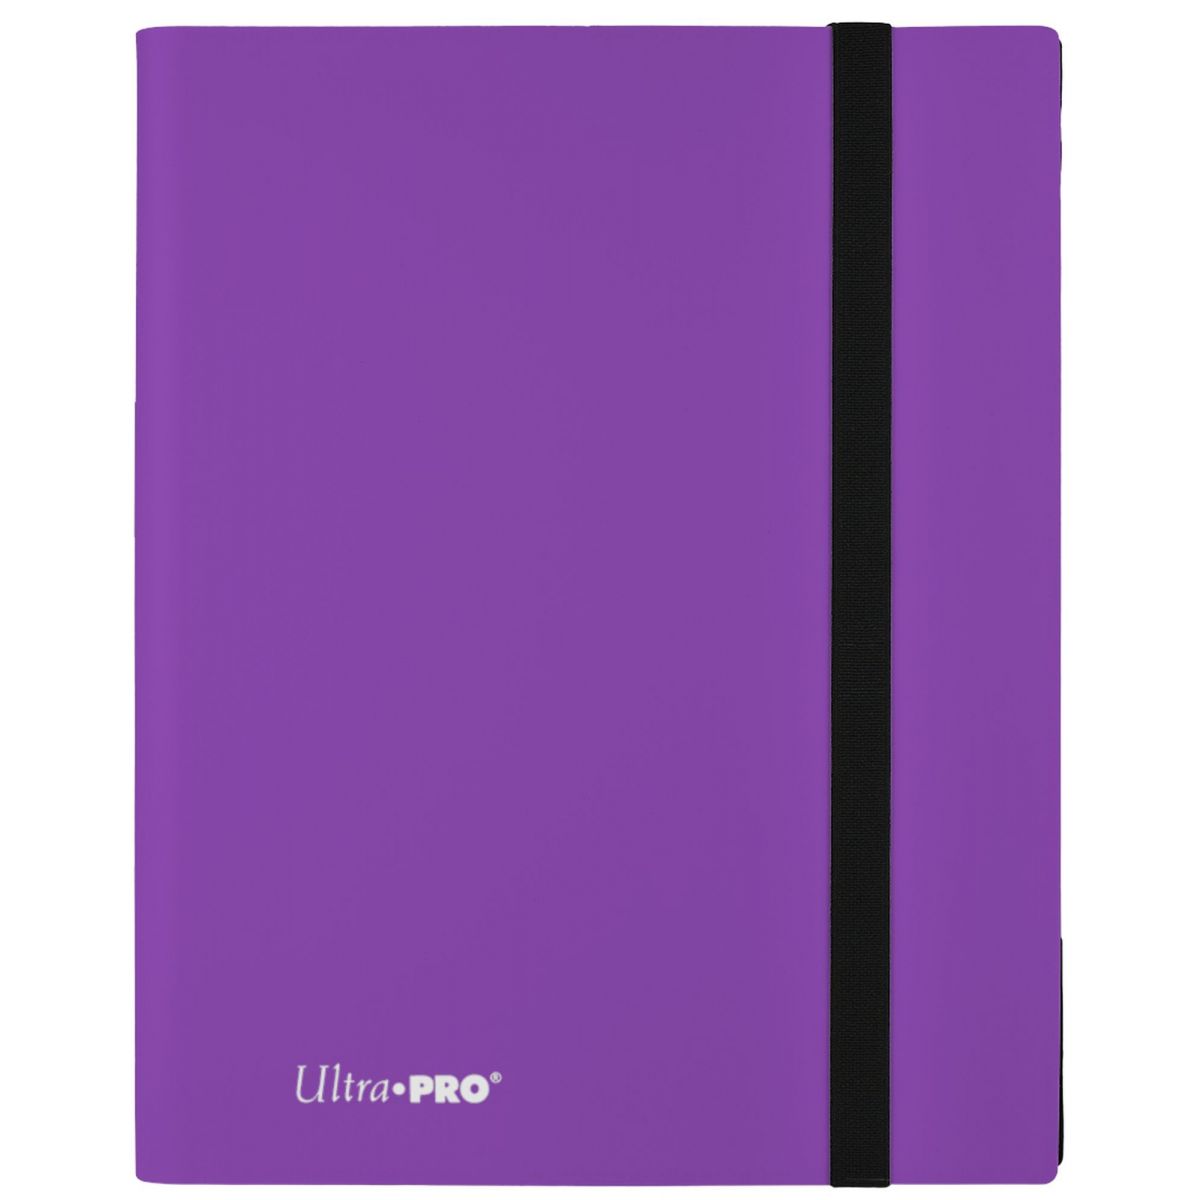 Item Ultra Pro - Pro Binder - Eclipse - 9 Cases - Violet / Royal Purple (360)